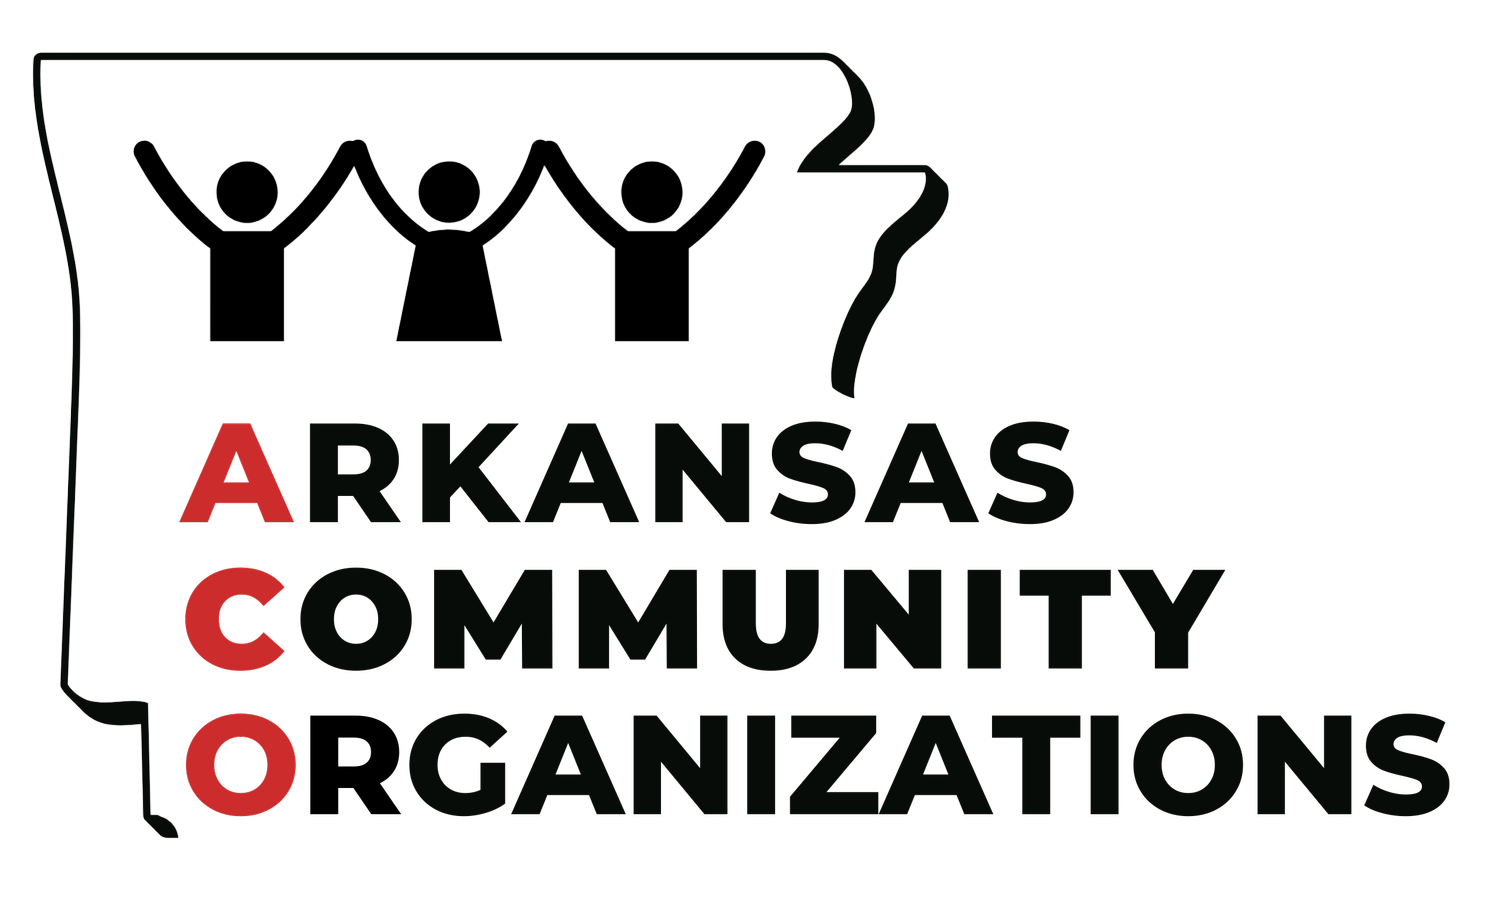 Arkansas Community Organizations